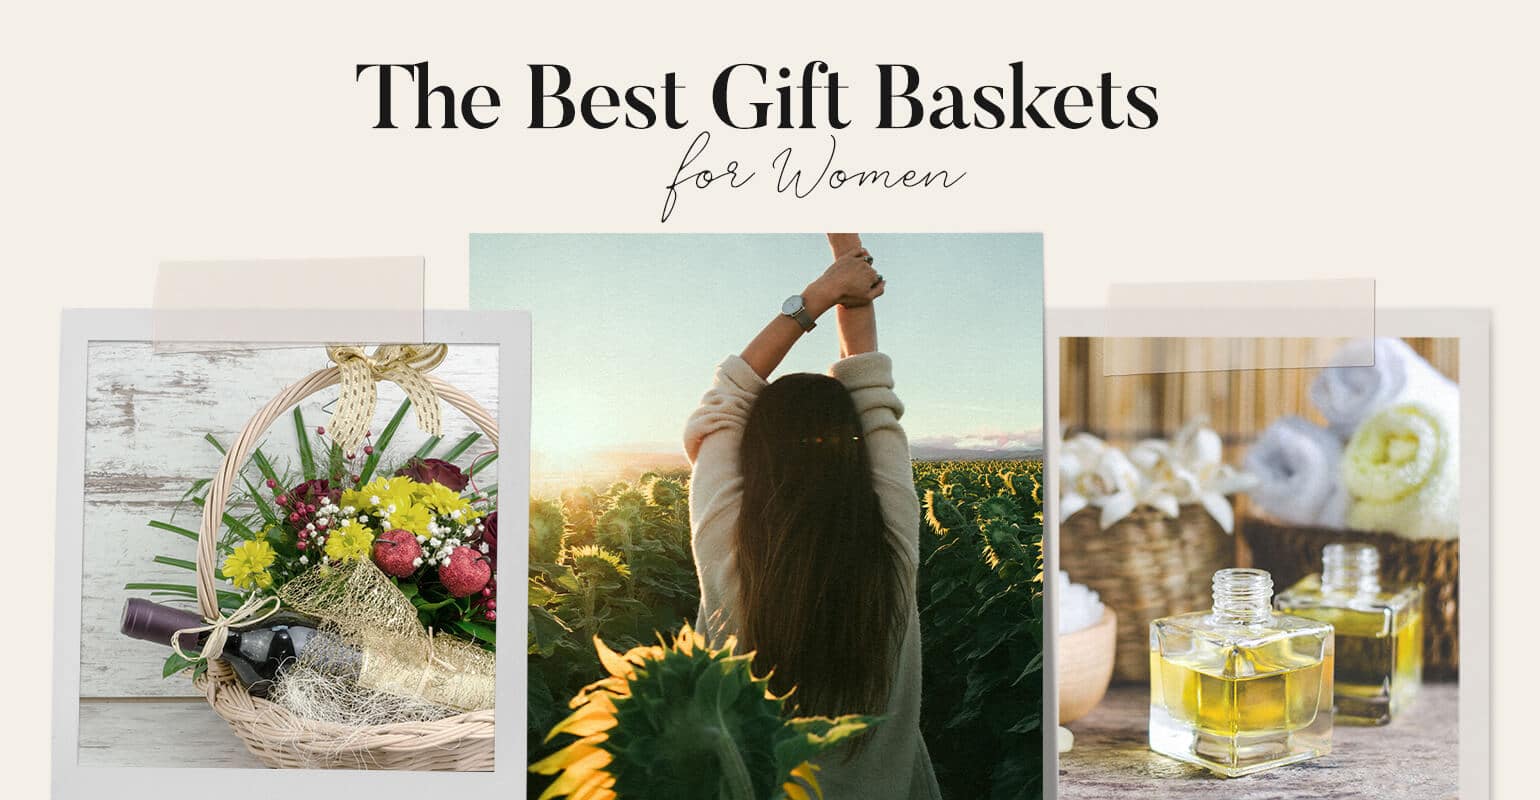 7 Best Gift Baskets for Women Guide